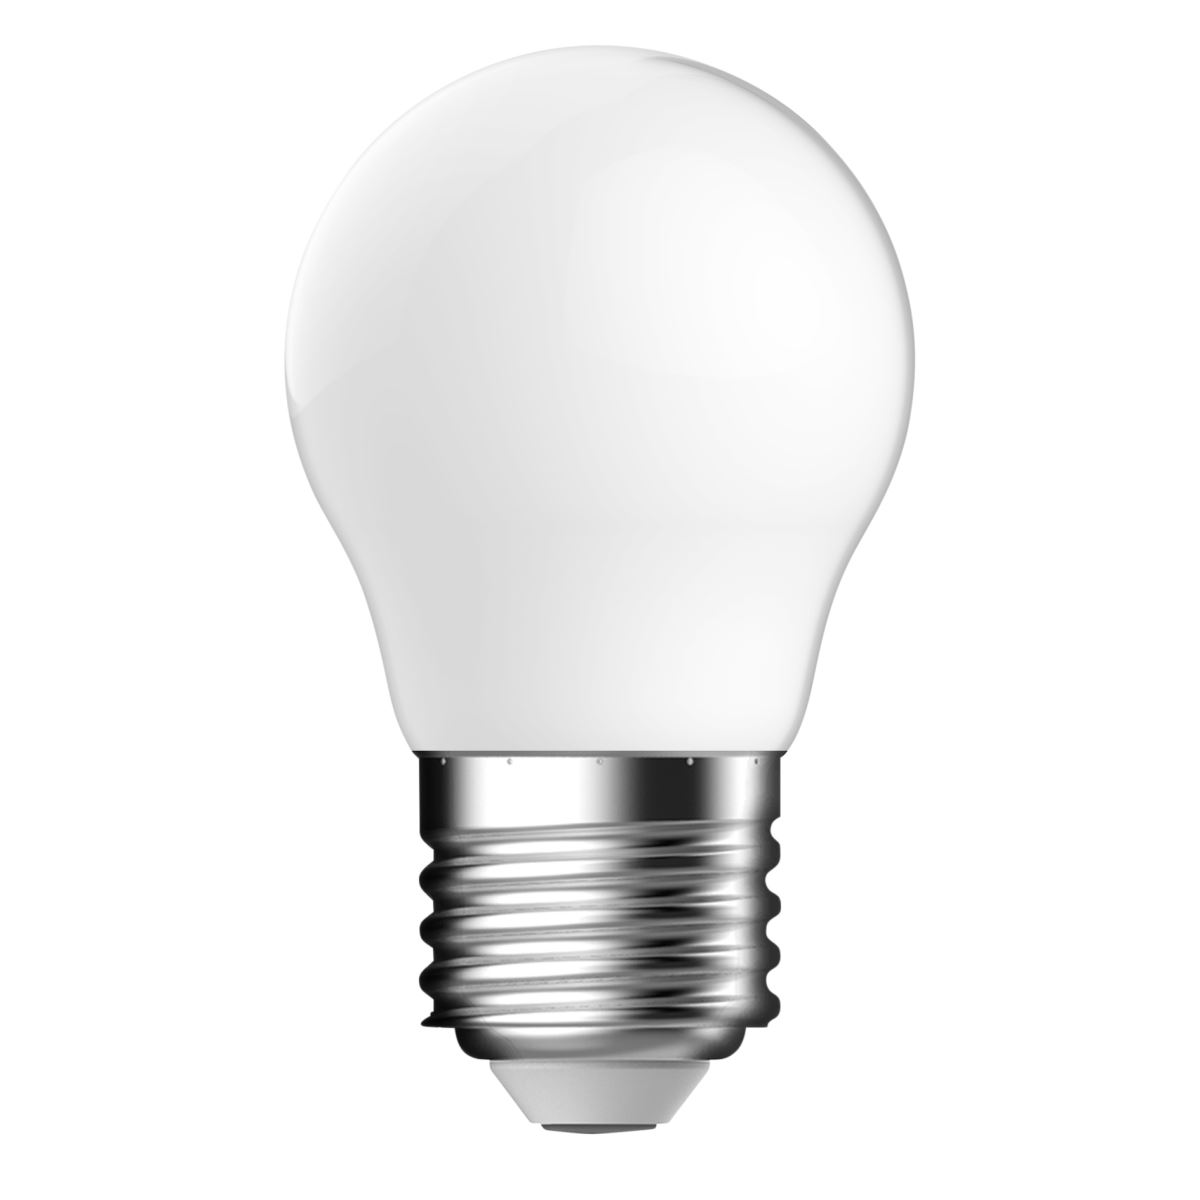 Nordlux Energetic LED Leuchtmittel E14 G45 Filament weiß 470lm 4000K 4,6W 80Ra 360° 4,5x4,5x7,9cm von Energetic